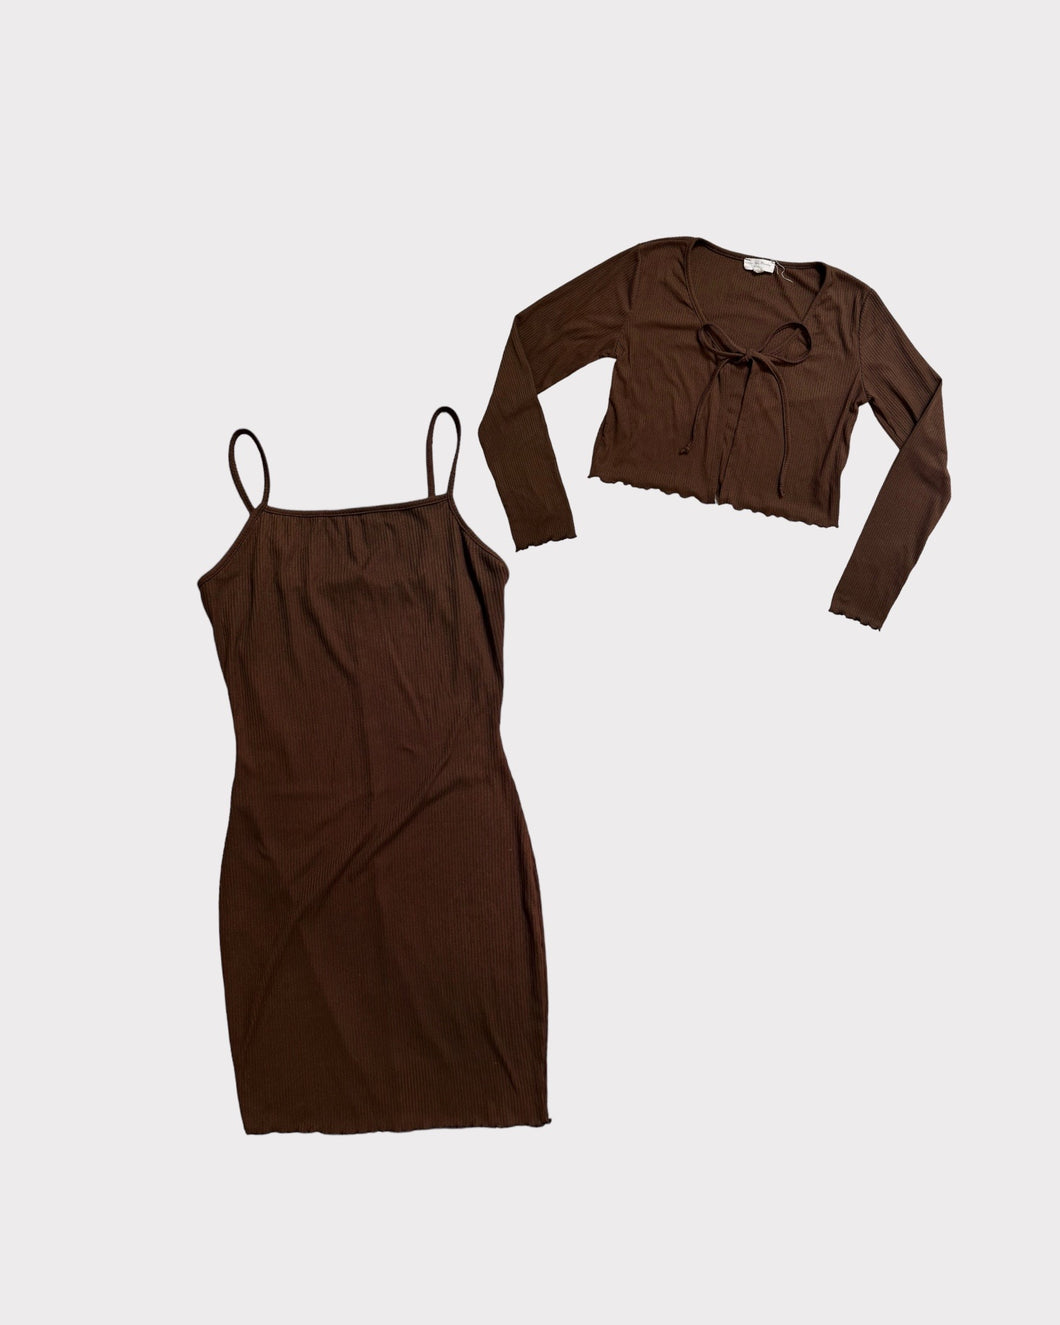 Anthropologie See You Monday Brown Dress + Cardigan Set (M)